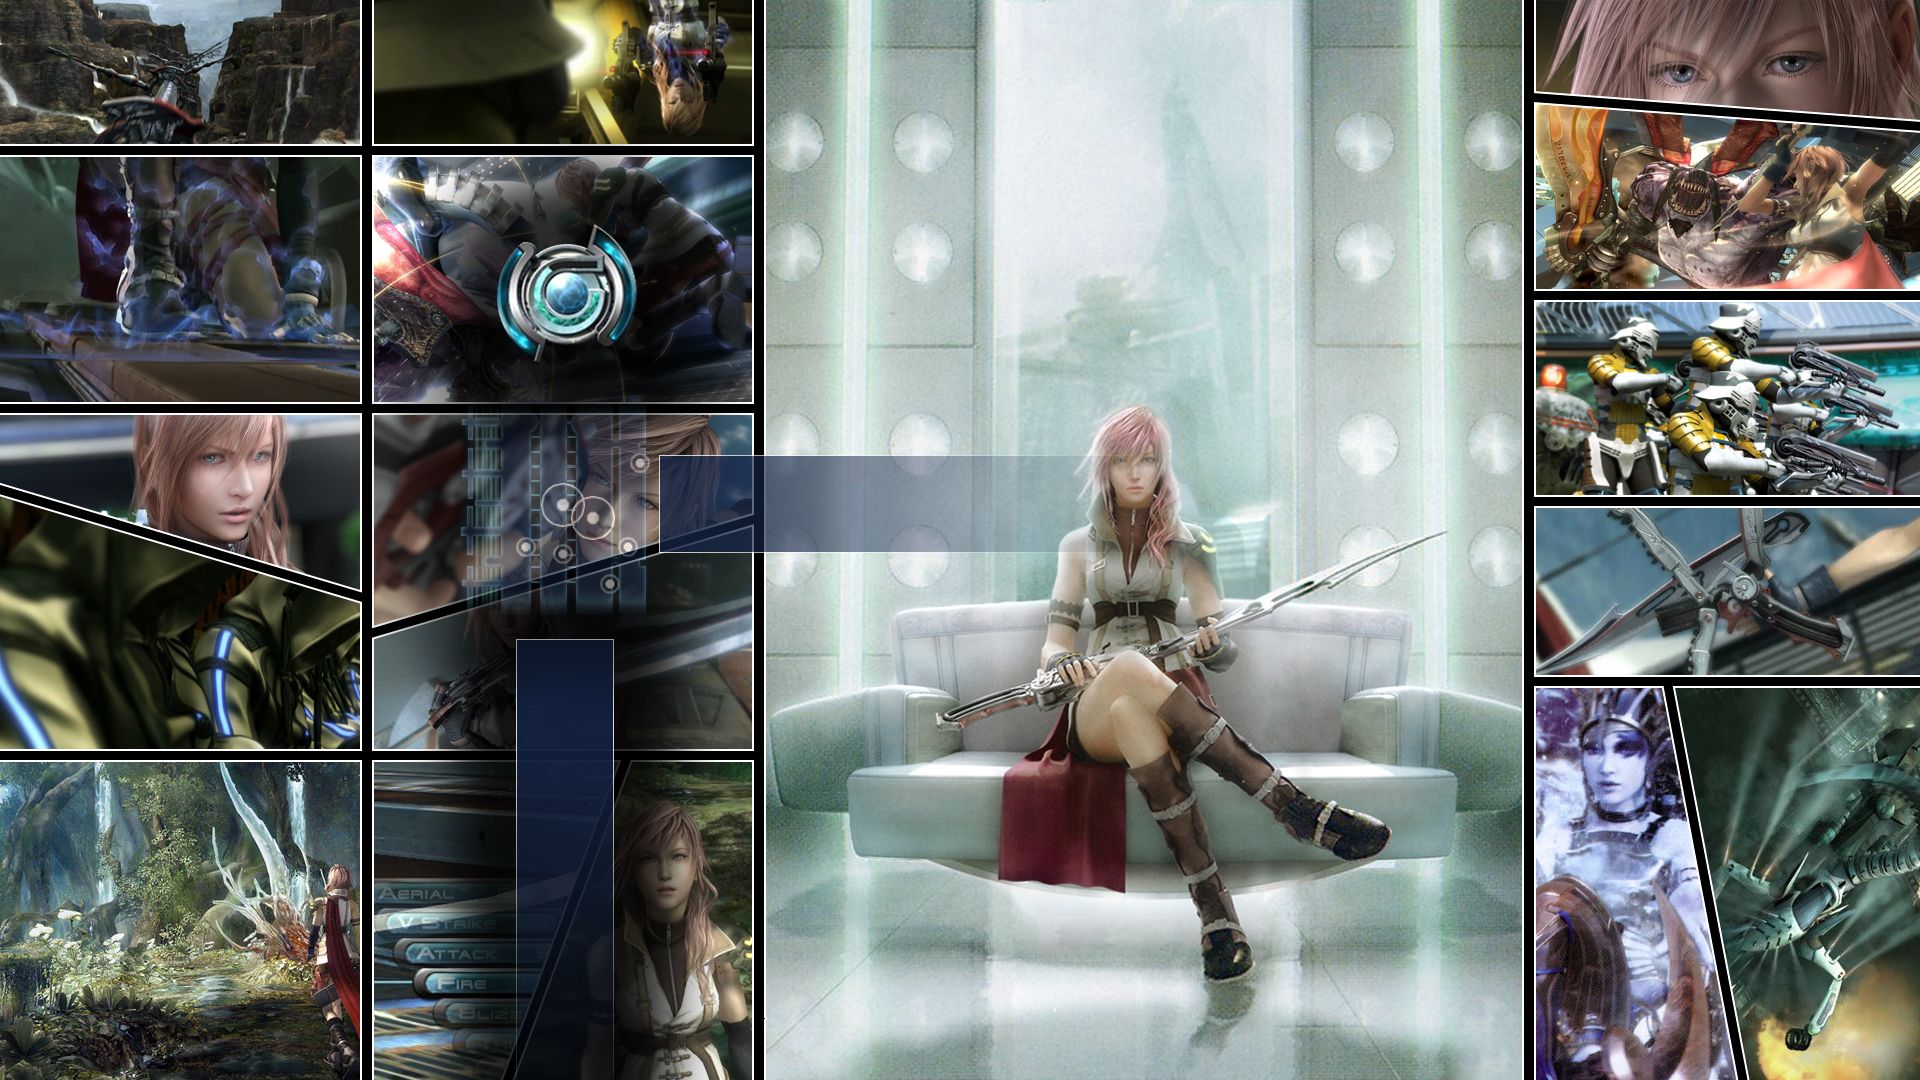 Final Fantasy XIII Wallpaper